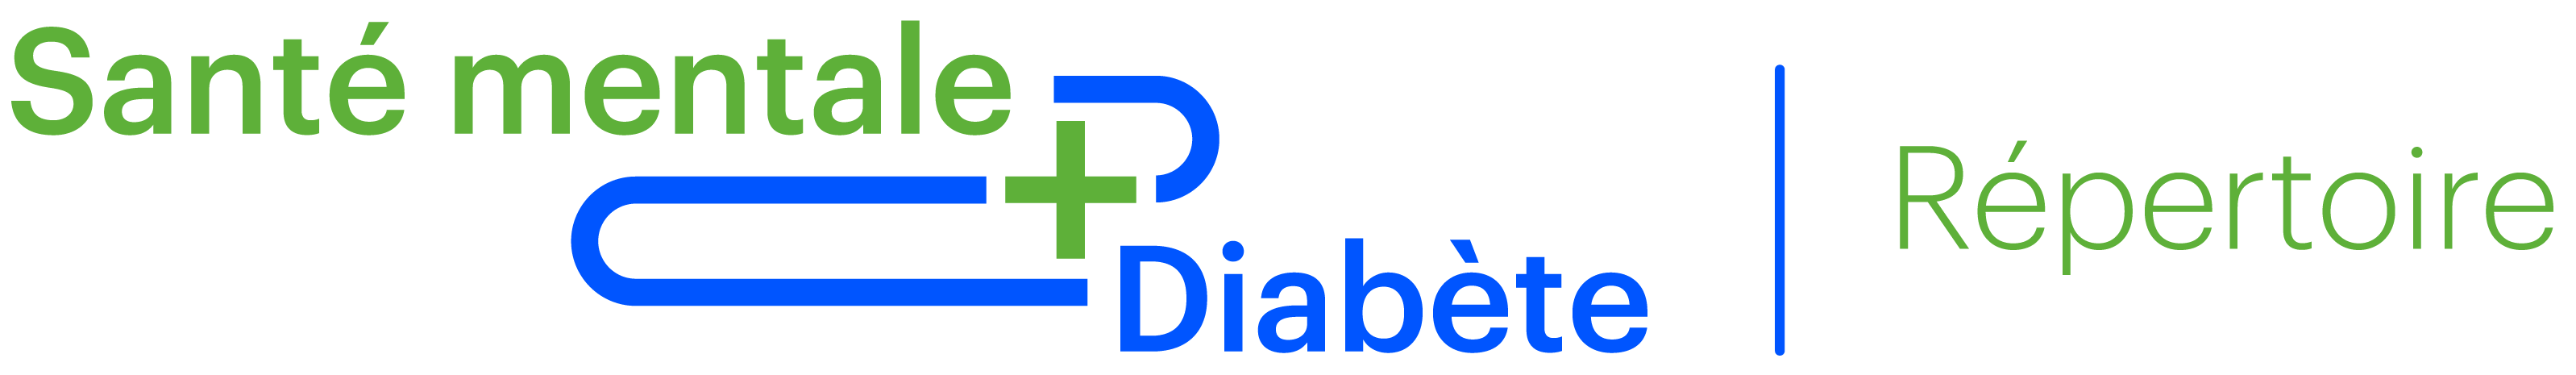 JDRF mental health + diabetes directory logo